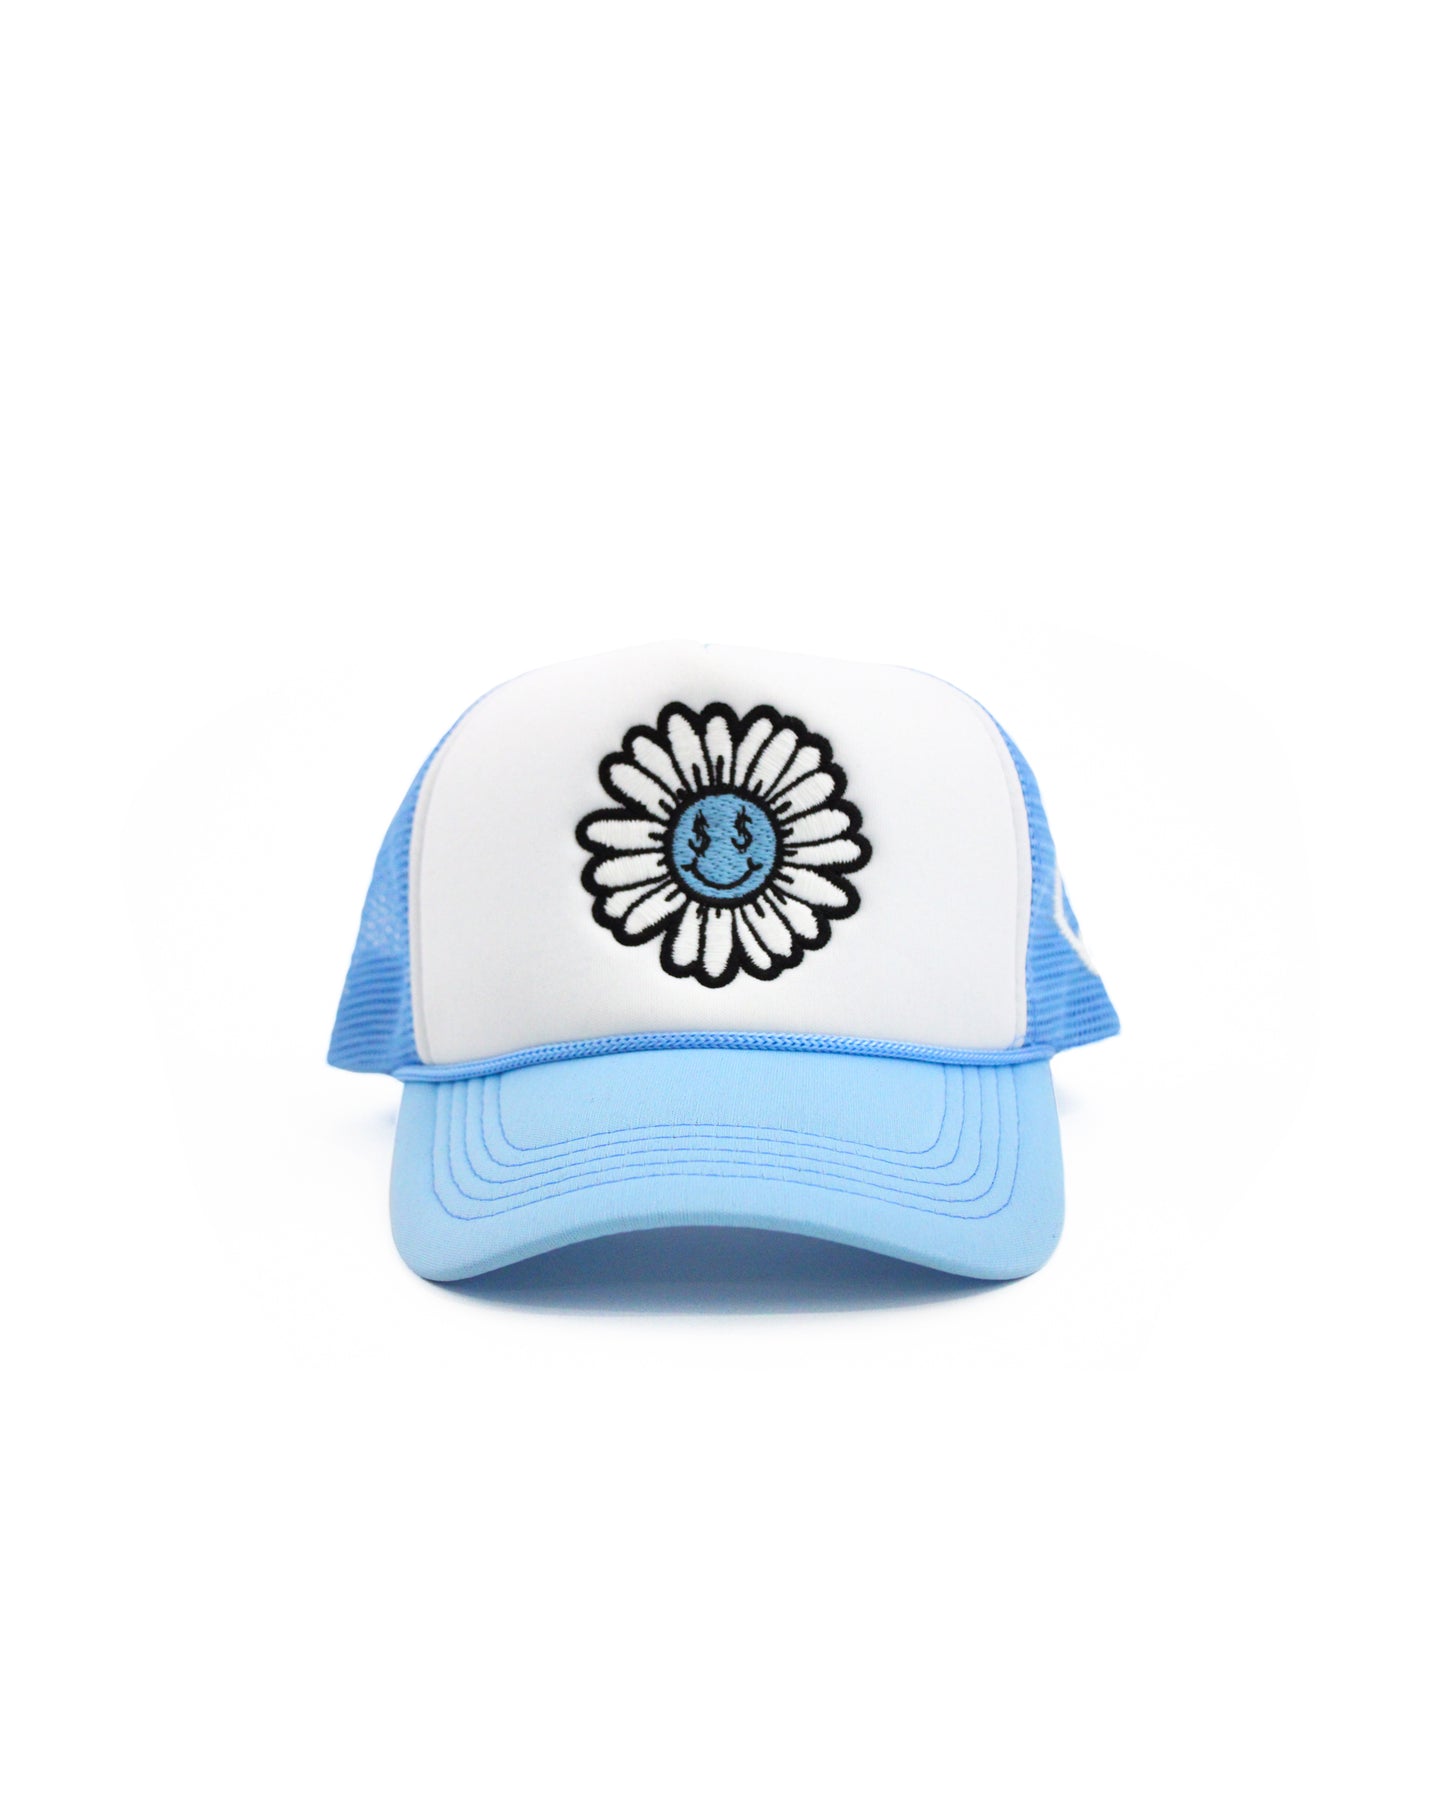 EVOL Peace Hat Baby Blue